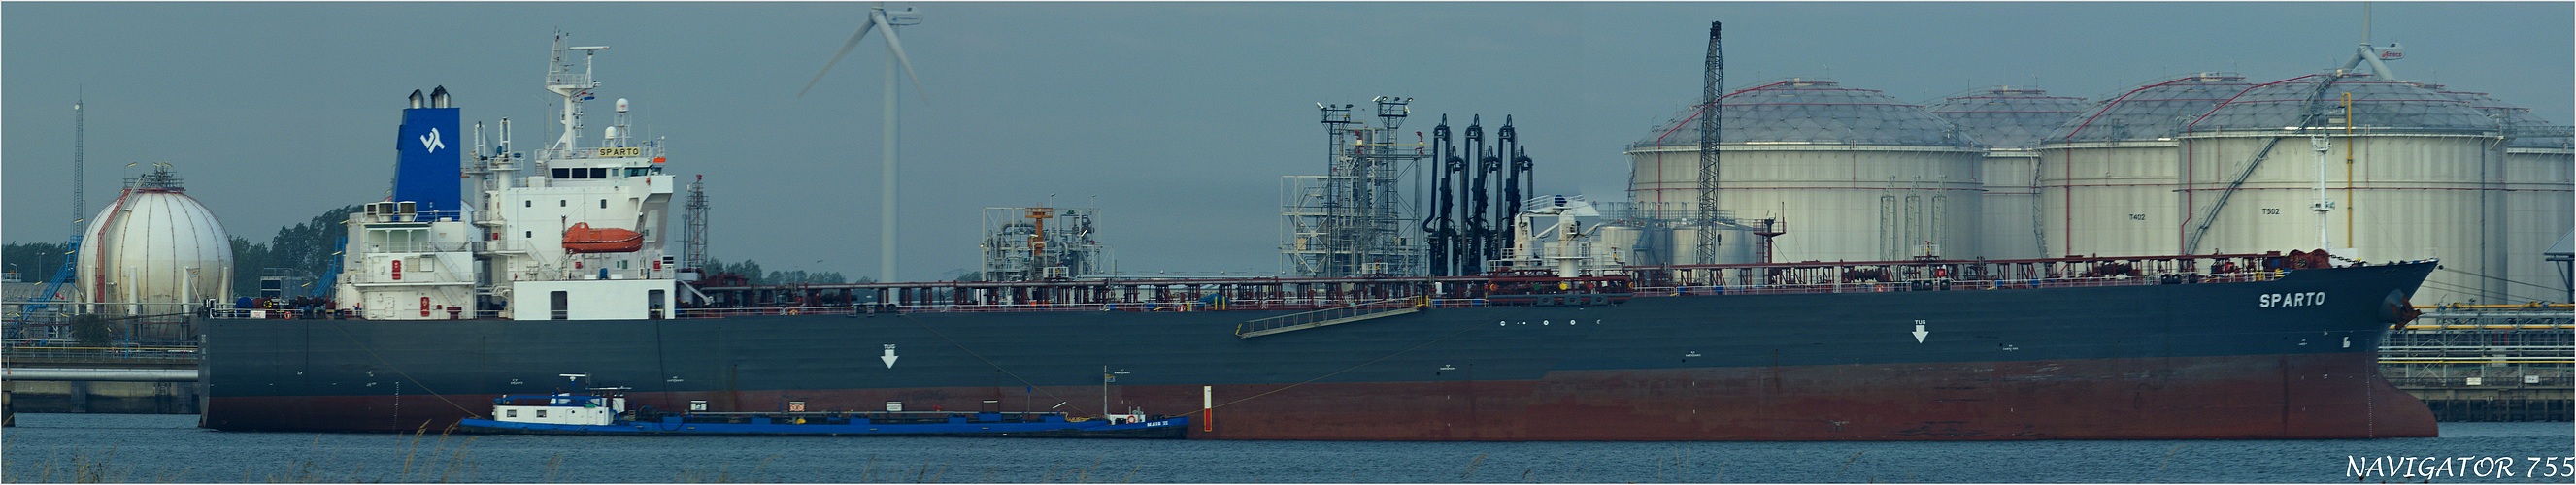 SPARTO / Crude Oil Tanker /4. Petroleumhafen / Europoort / Rotterdam / Bitte scrollen!